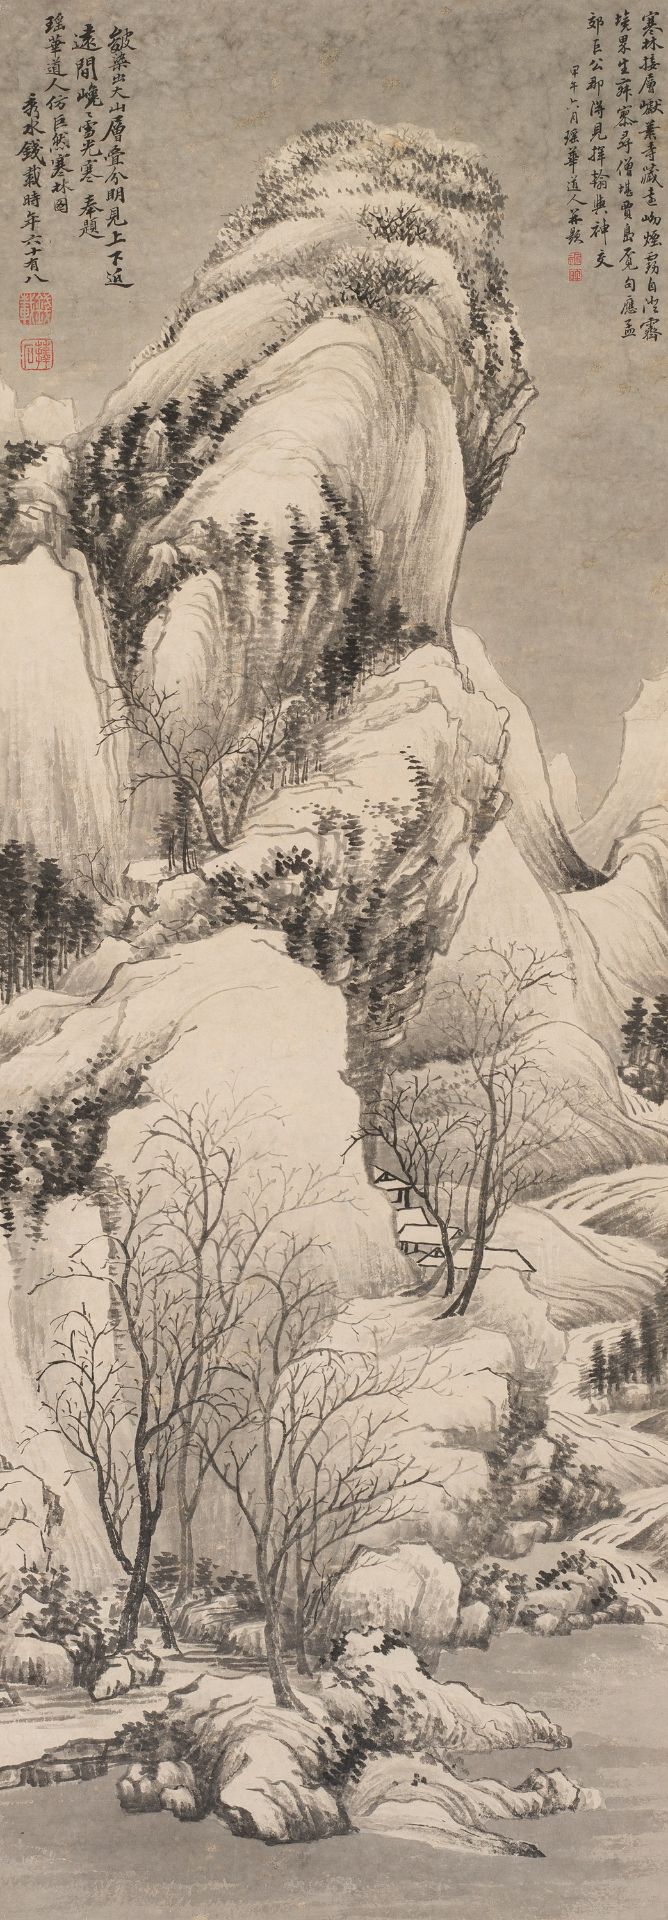 HONG WU (1743-1811): 'LANDSCAPE AFTER JURAN', DATED 1804